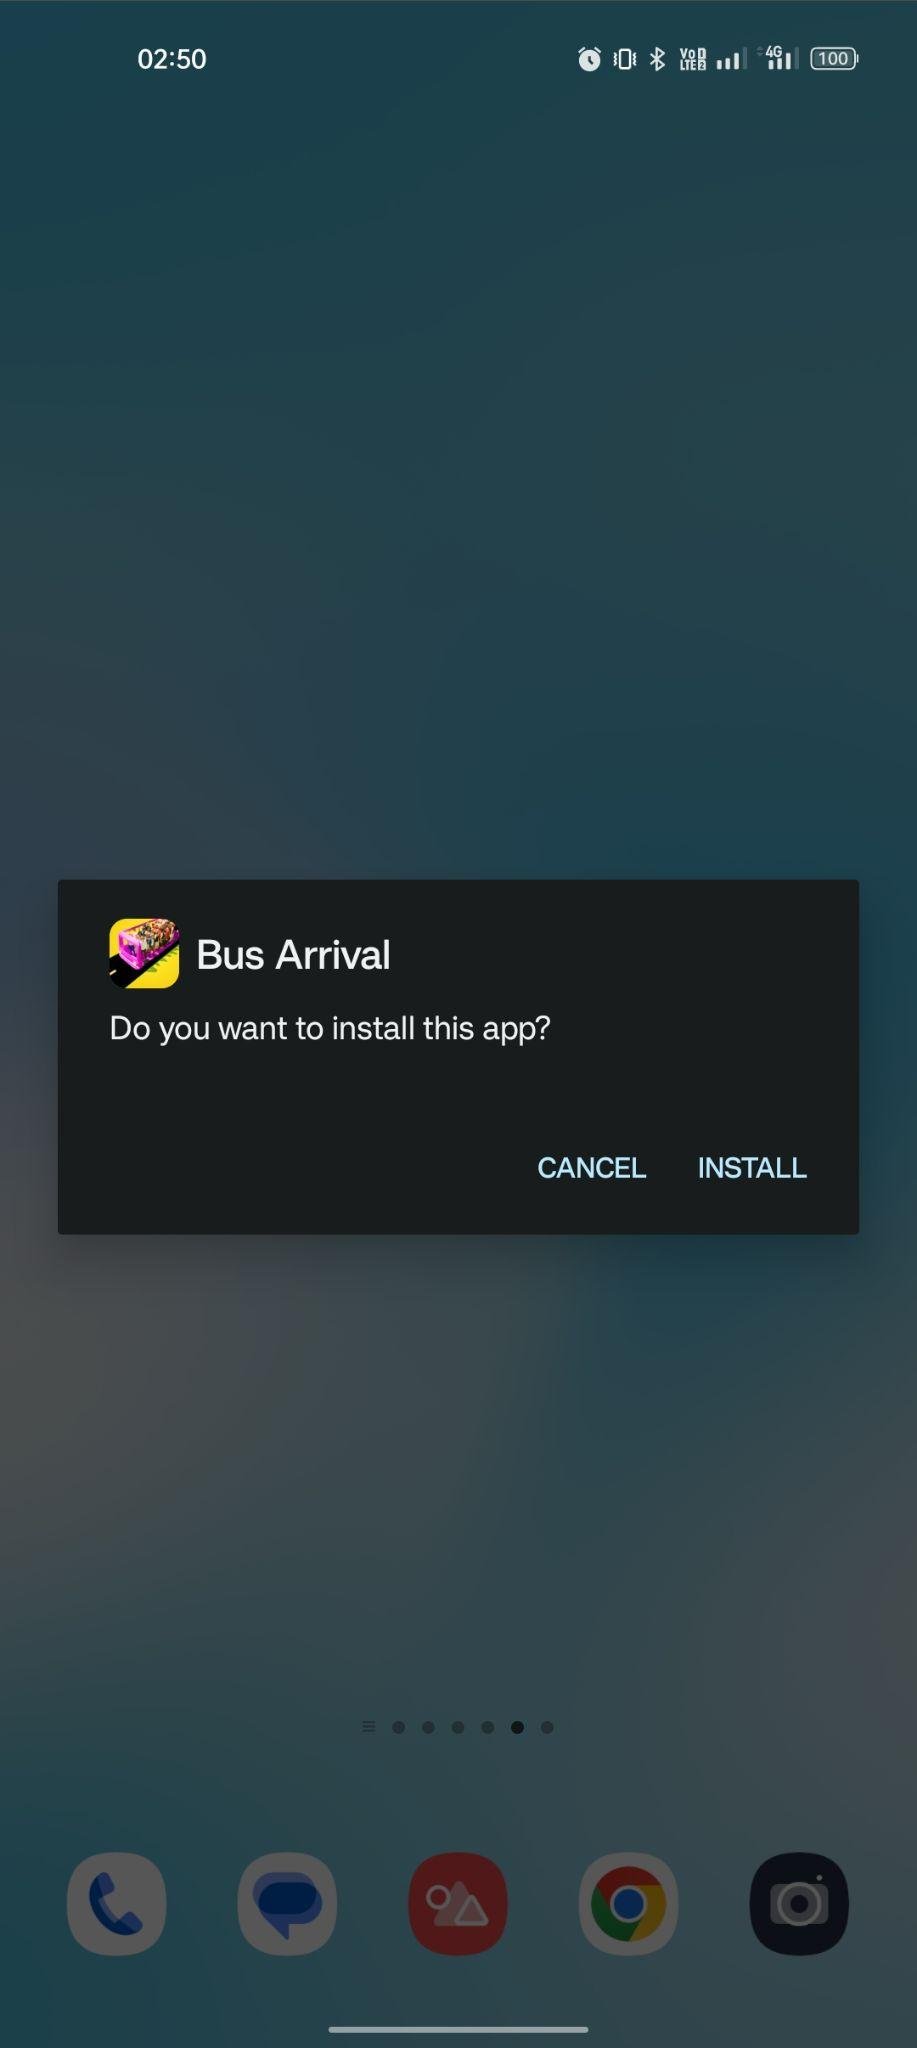 click on install